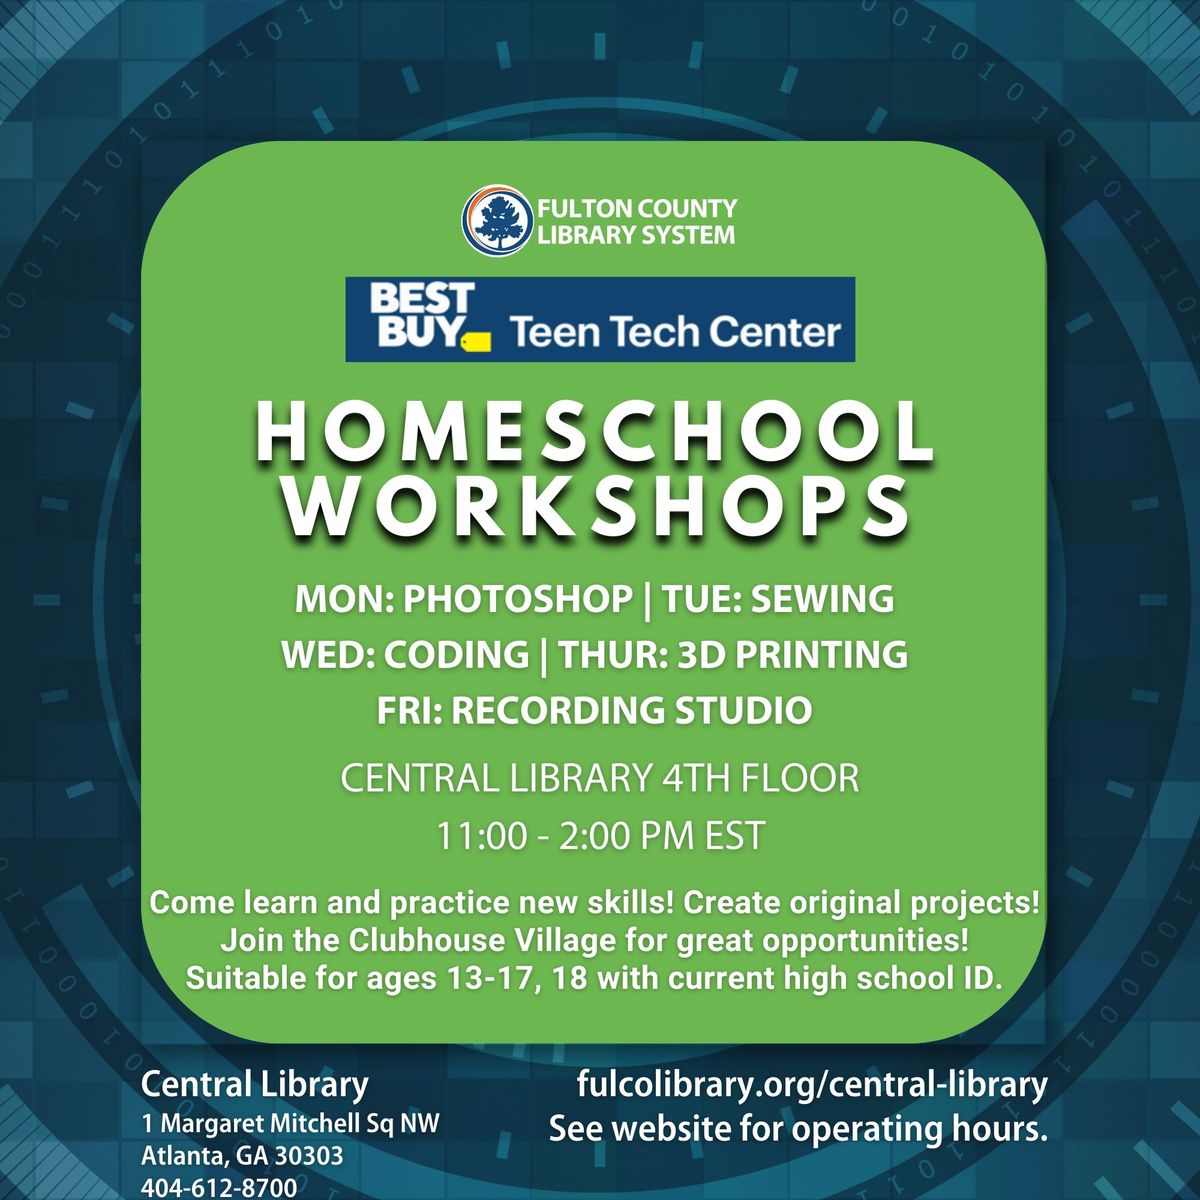 Best Buy Teen Tech Center Workshops for Homeschool Teens